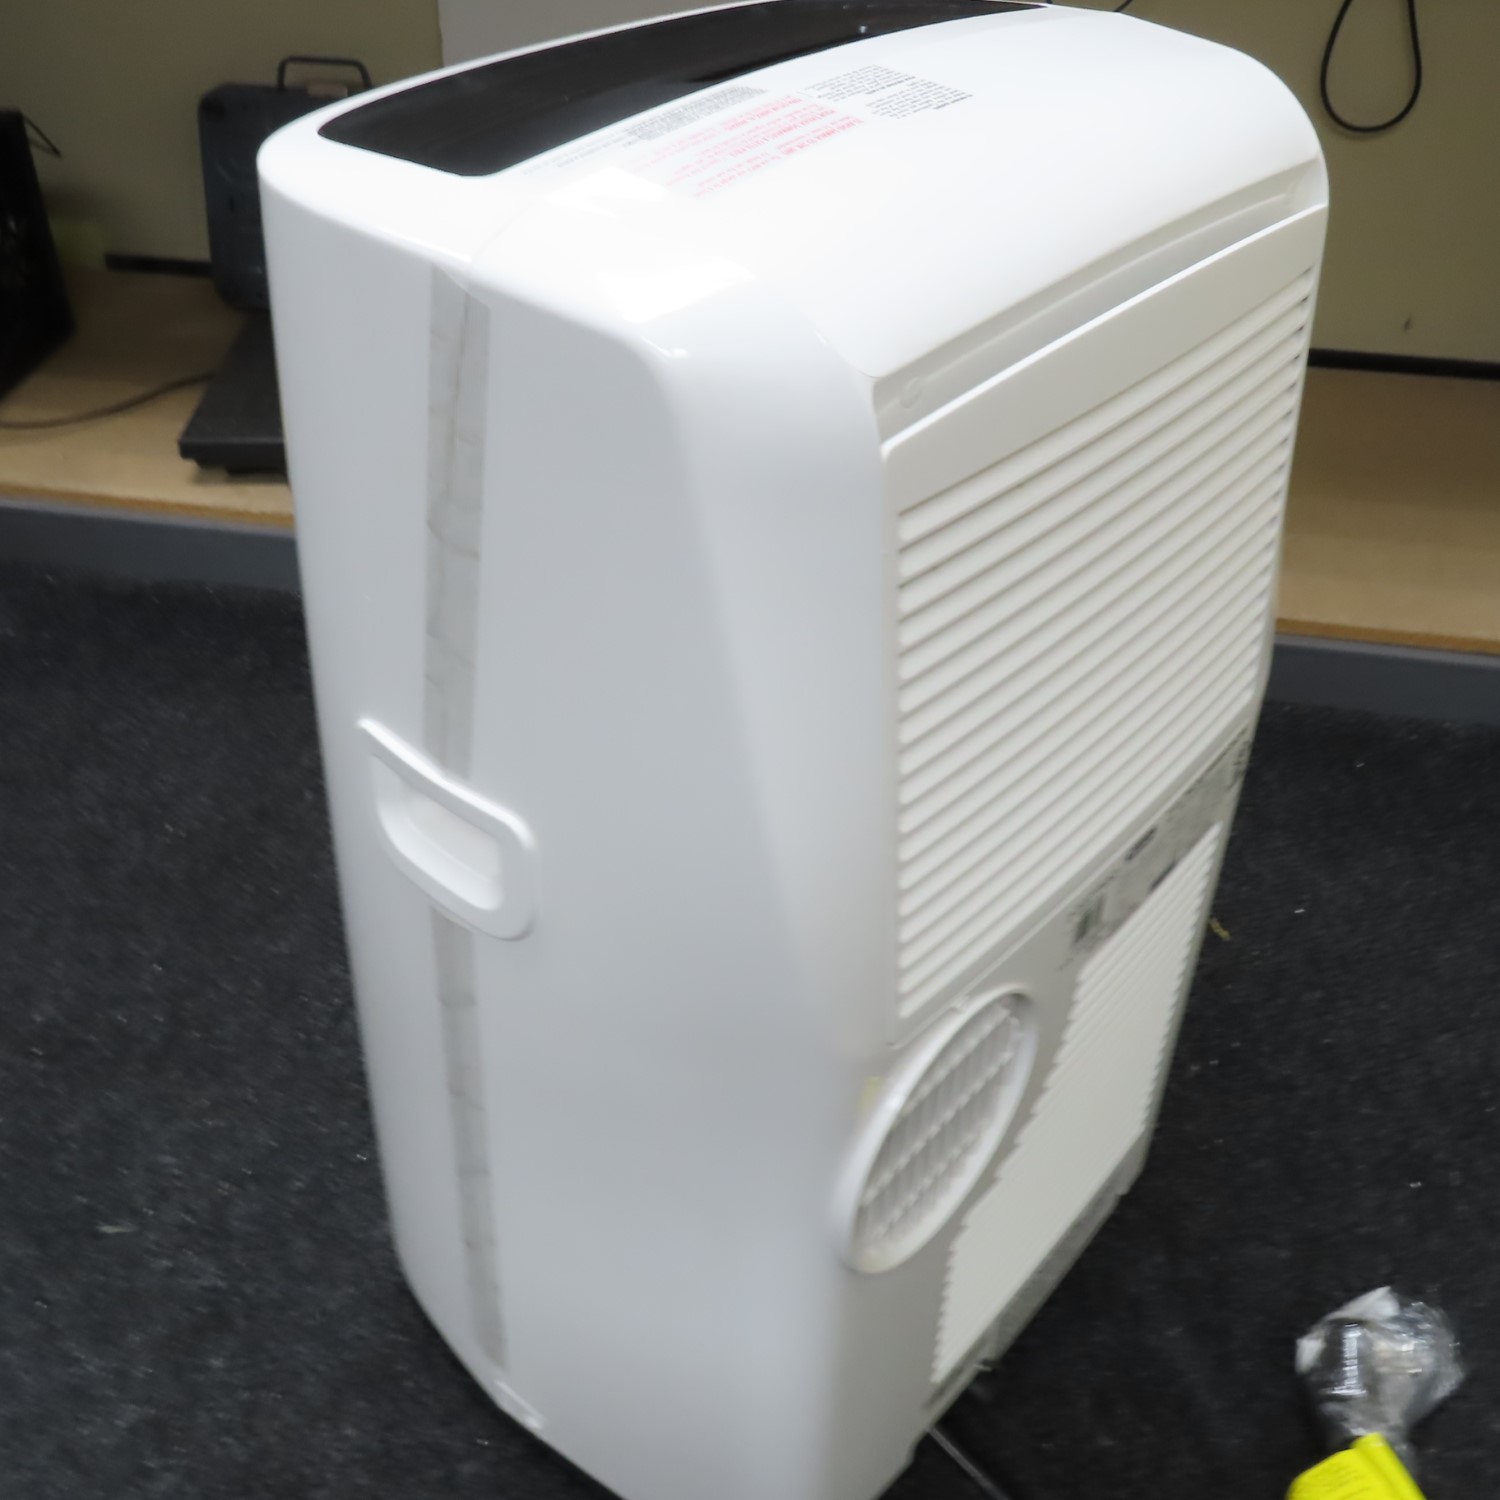 BLACK+DECKER BPACT14WT Portable Air Conditioner for sale online